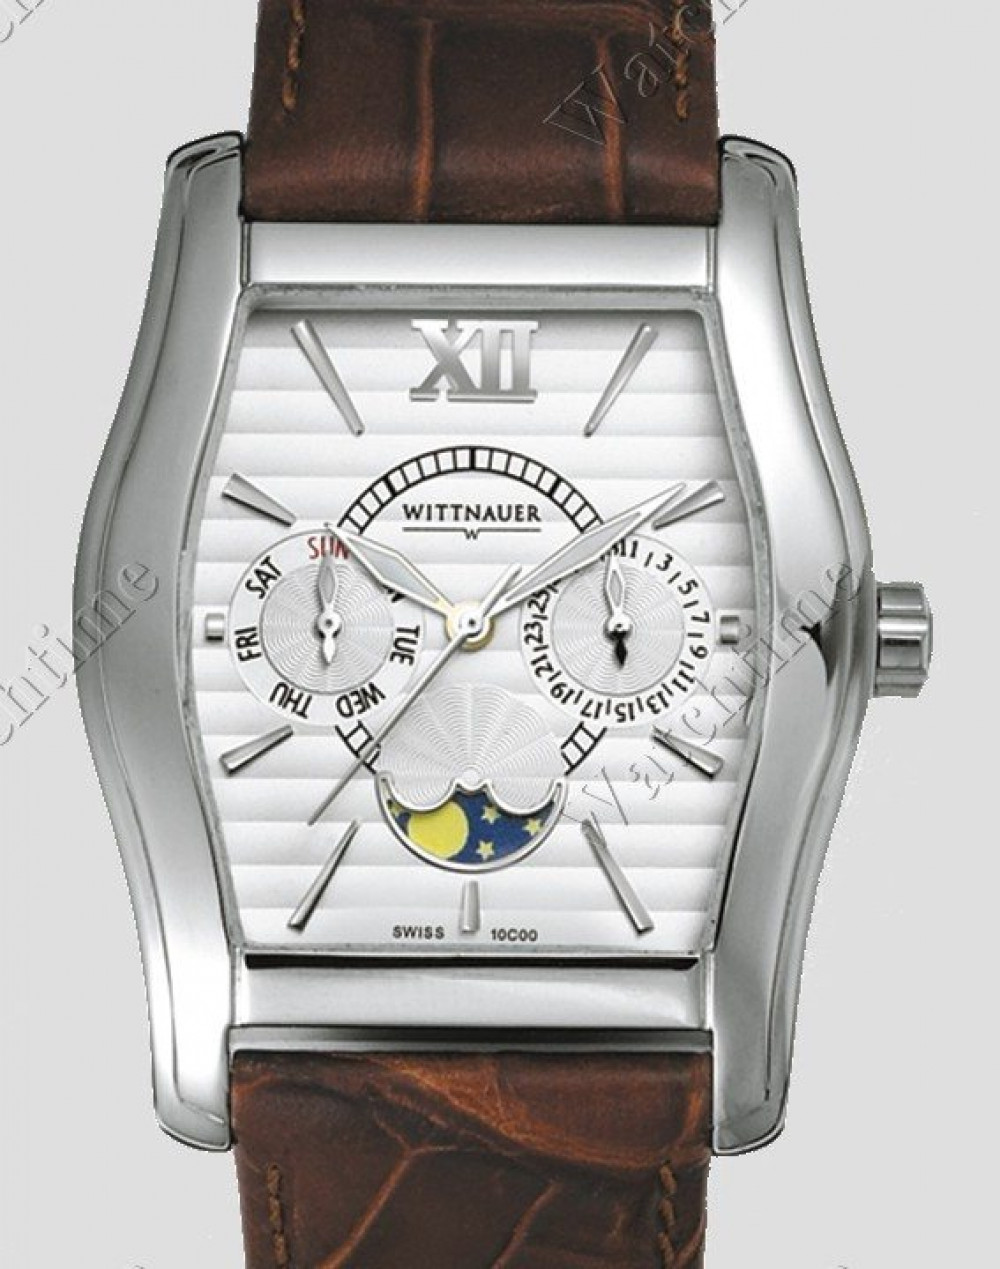 Zegarek firmy Wittnauer, model Belasco